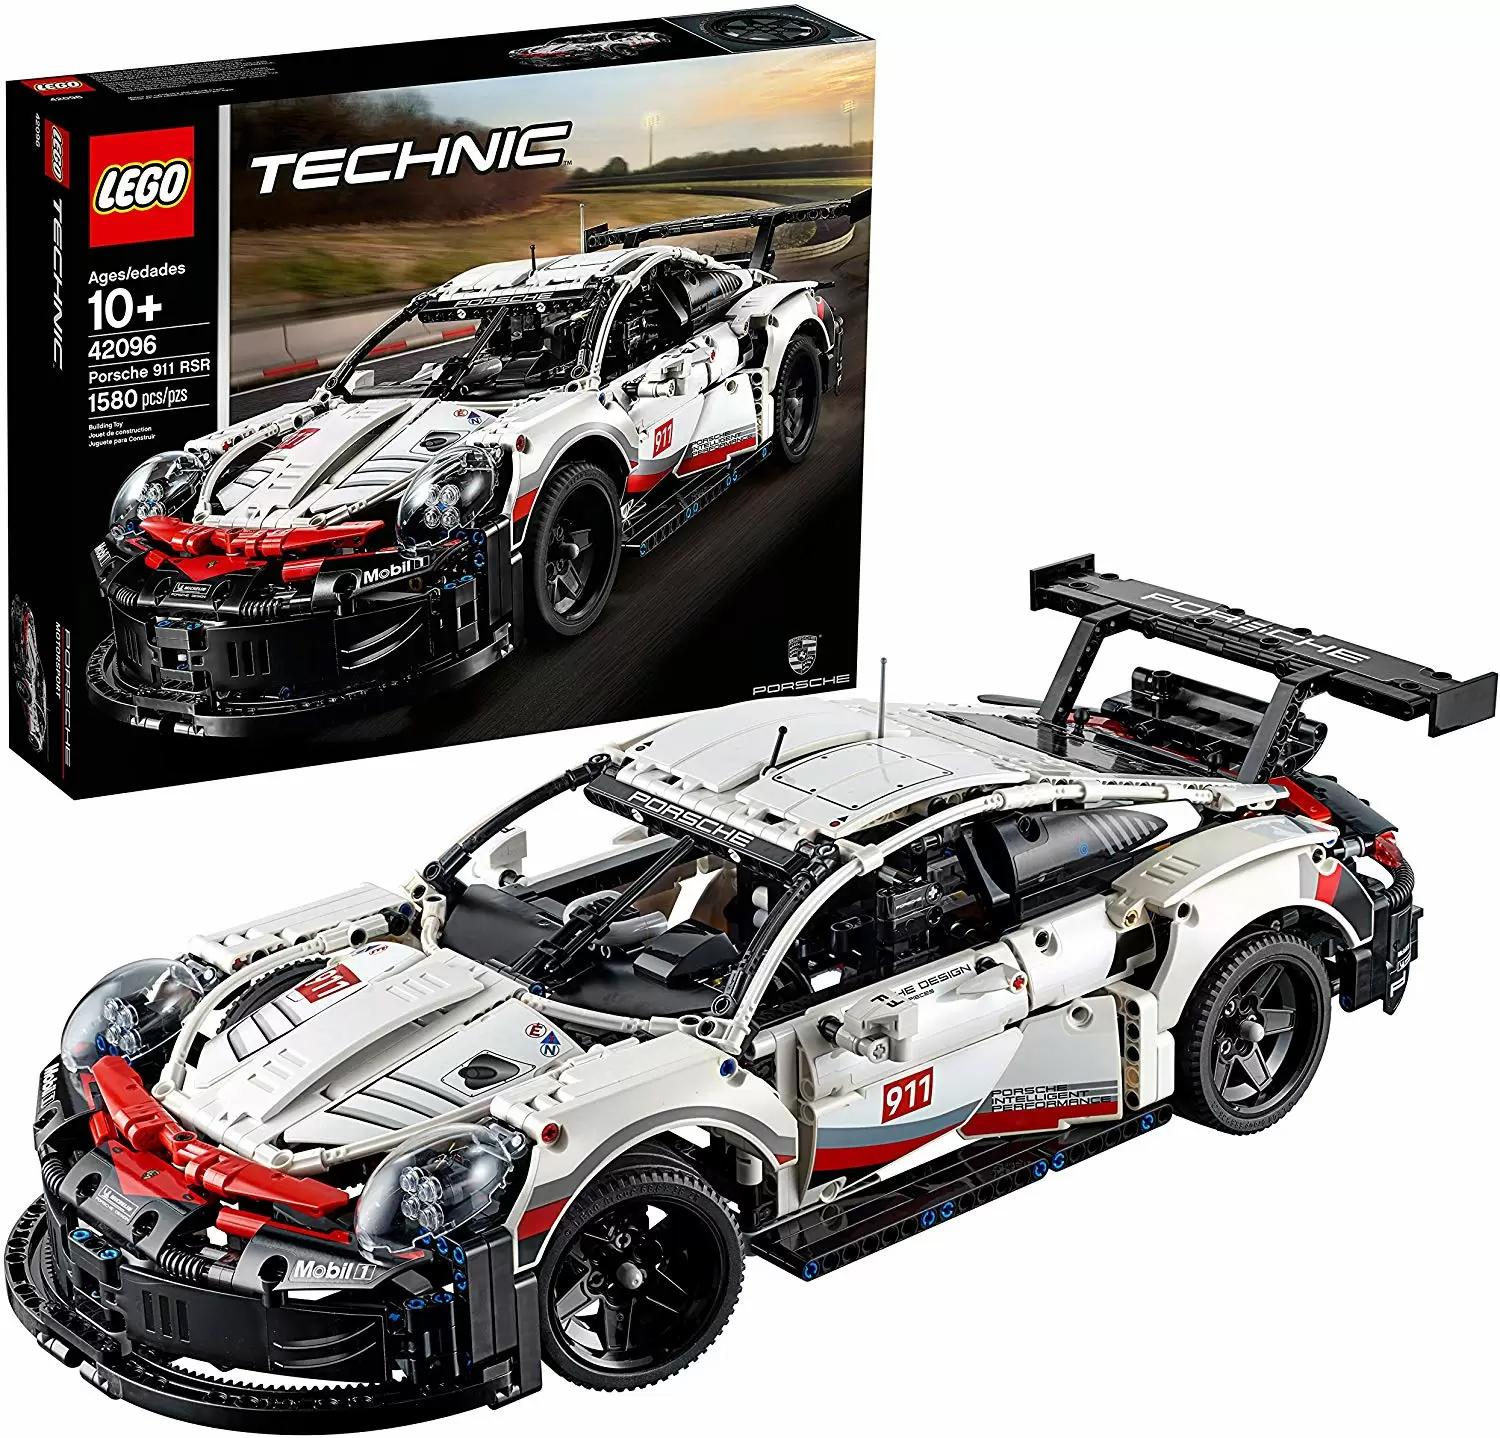 LEGO Technic Porsche 911 RSR Race Car Building Set for $127.40 Shipped